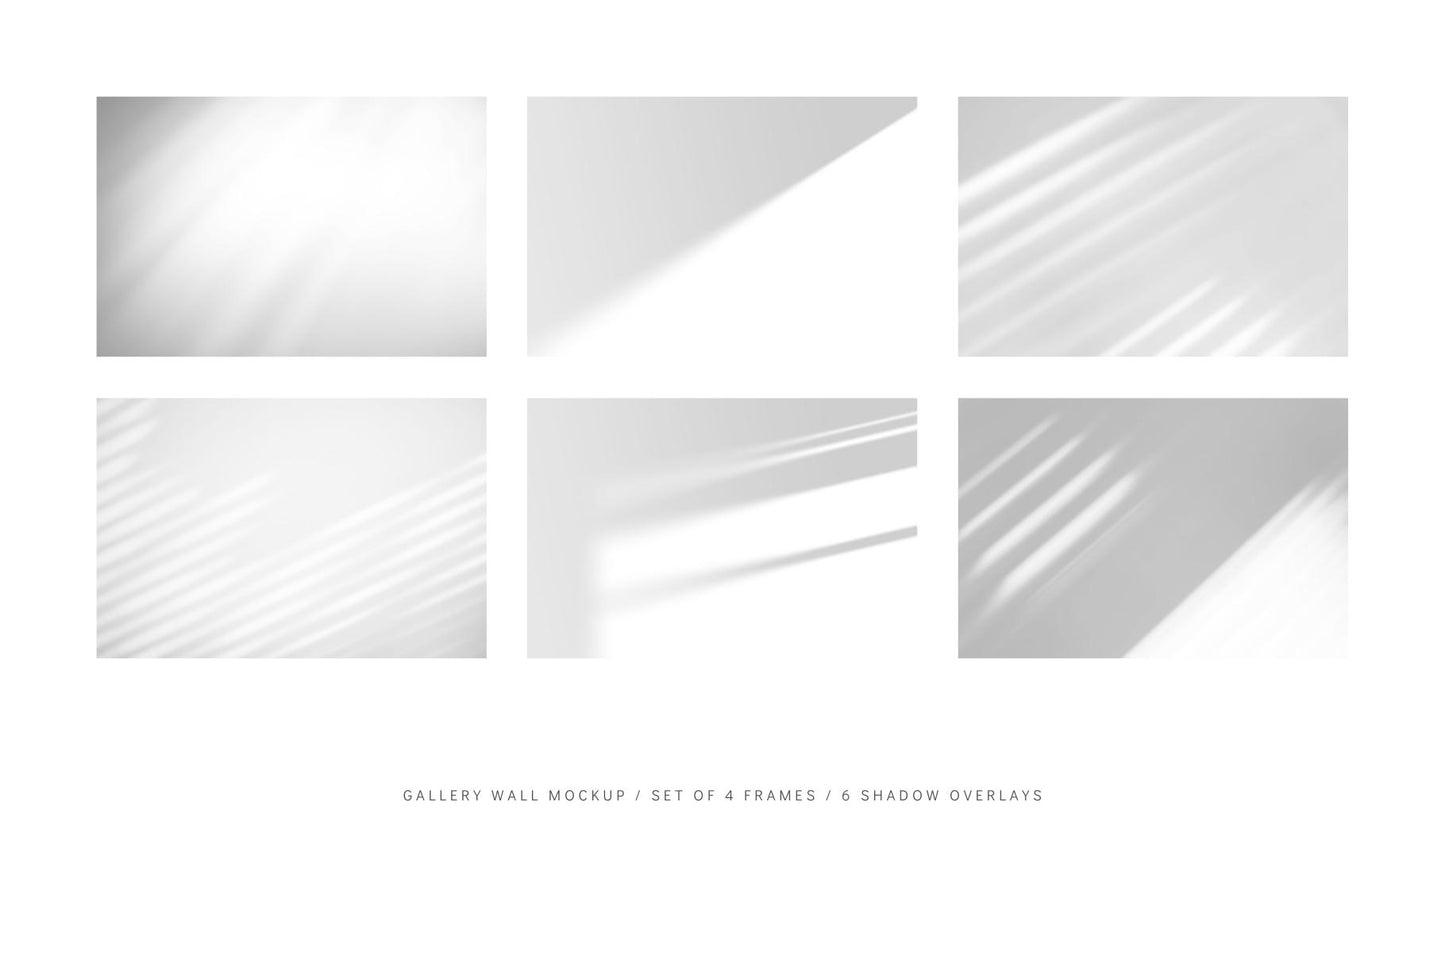 Gallery Wall Mockup | Set of 4 Frames | Frame Mockup | PSD | Shadow Overlays